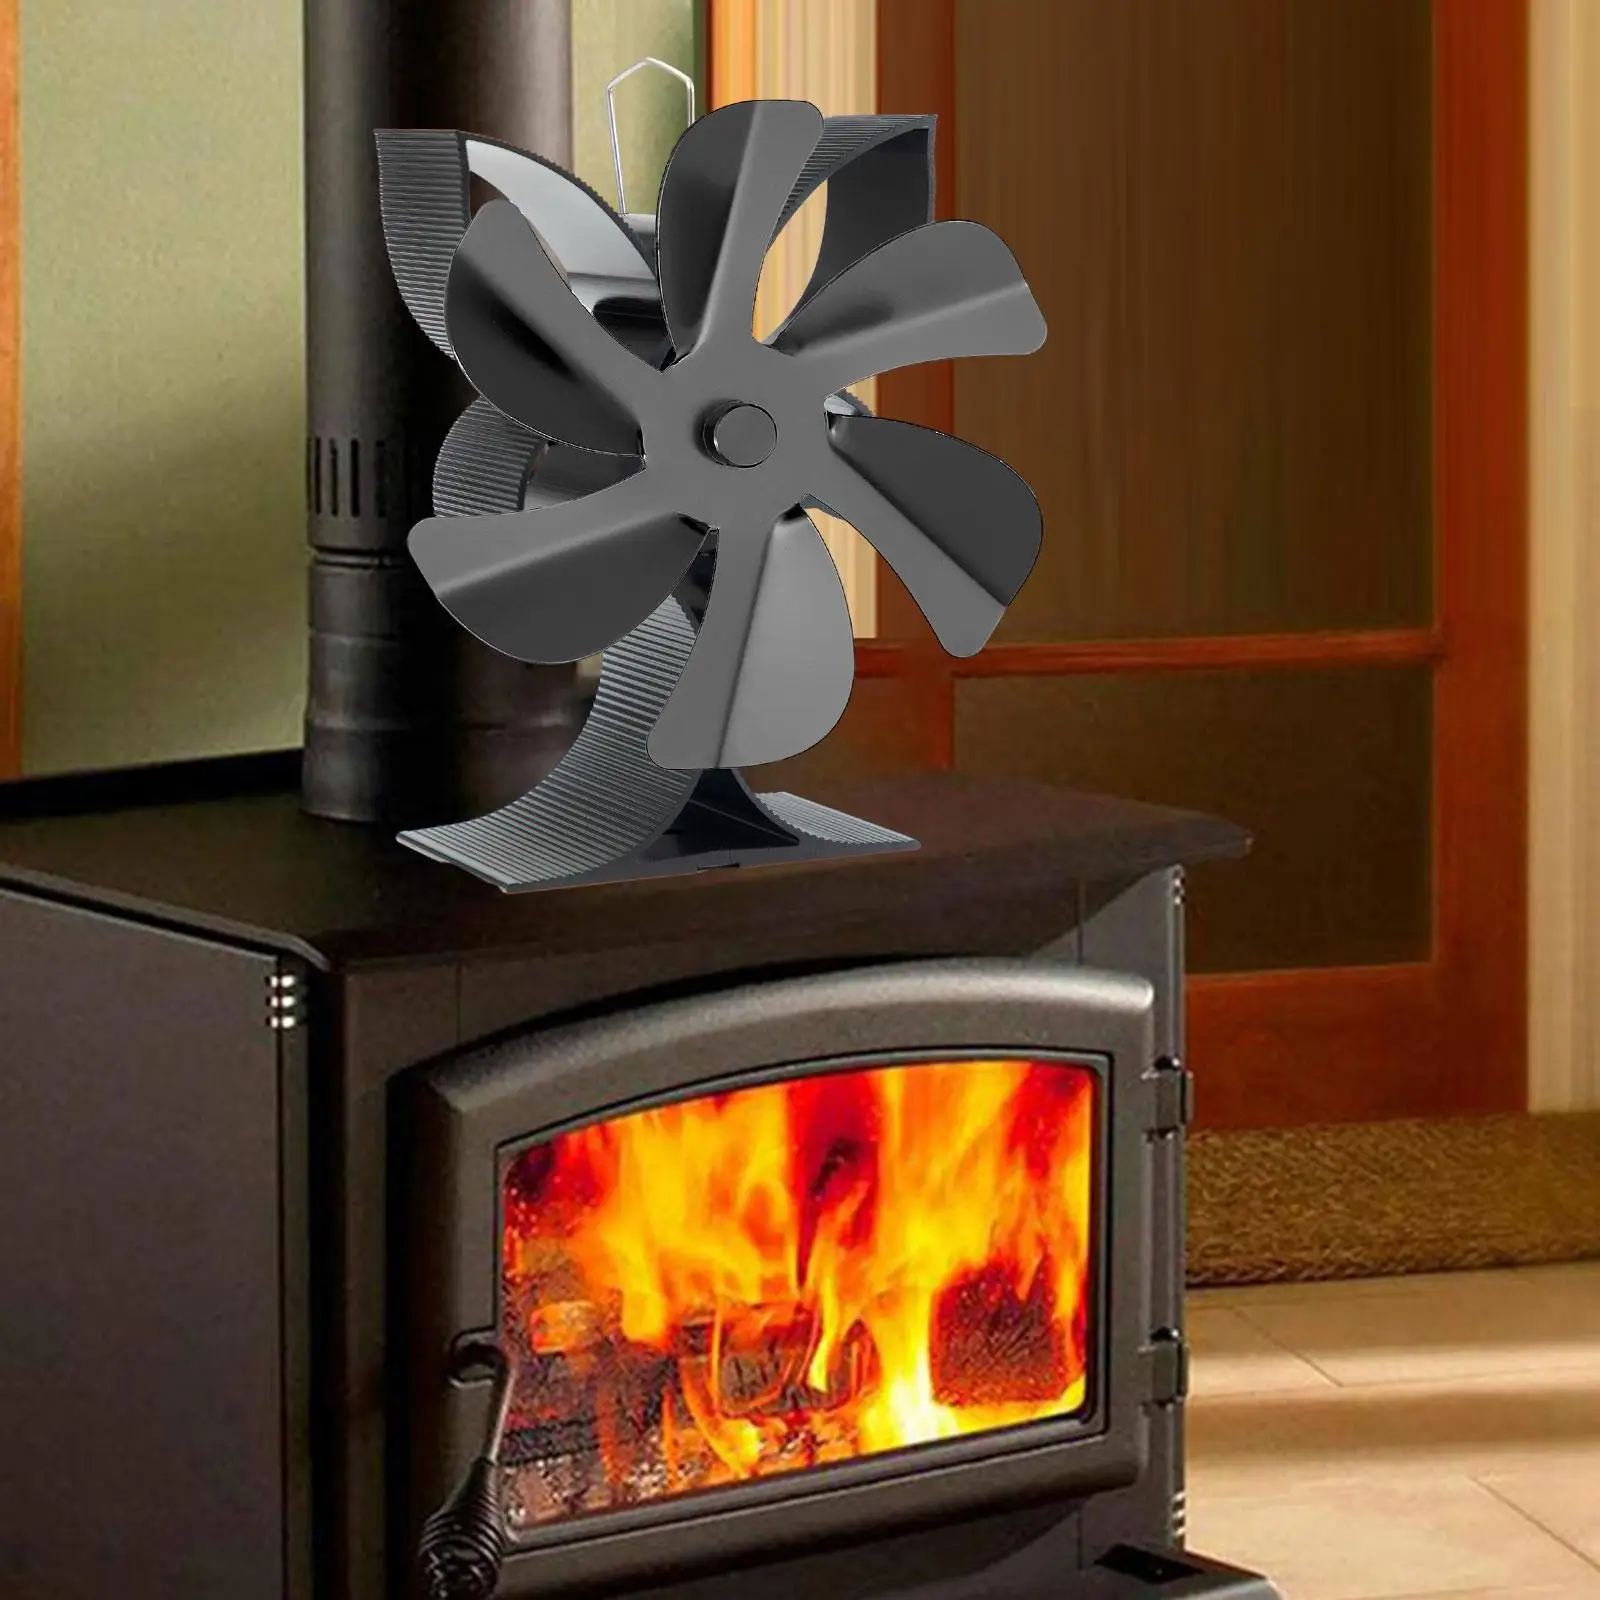 Wood Burning Fan Fireplace Stove Fan 6 Blade Efficient Durable Working Temperature 50-350°C Versatile Aluminum Low Noise